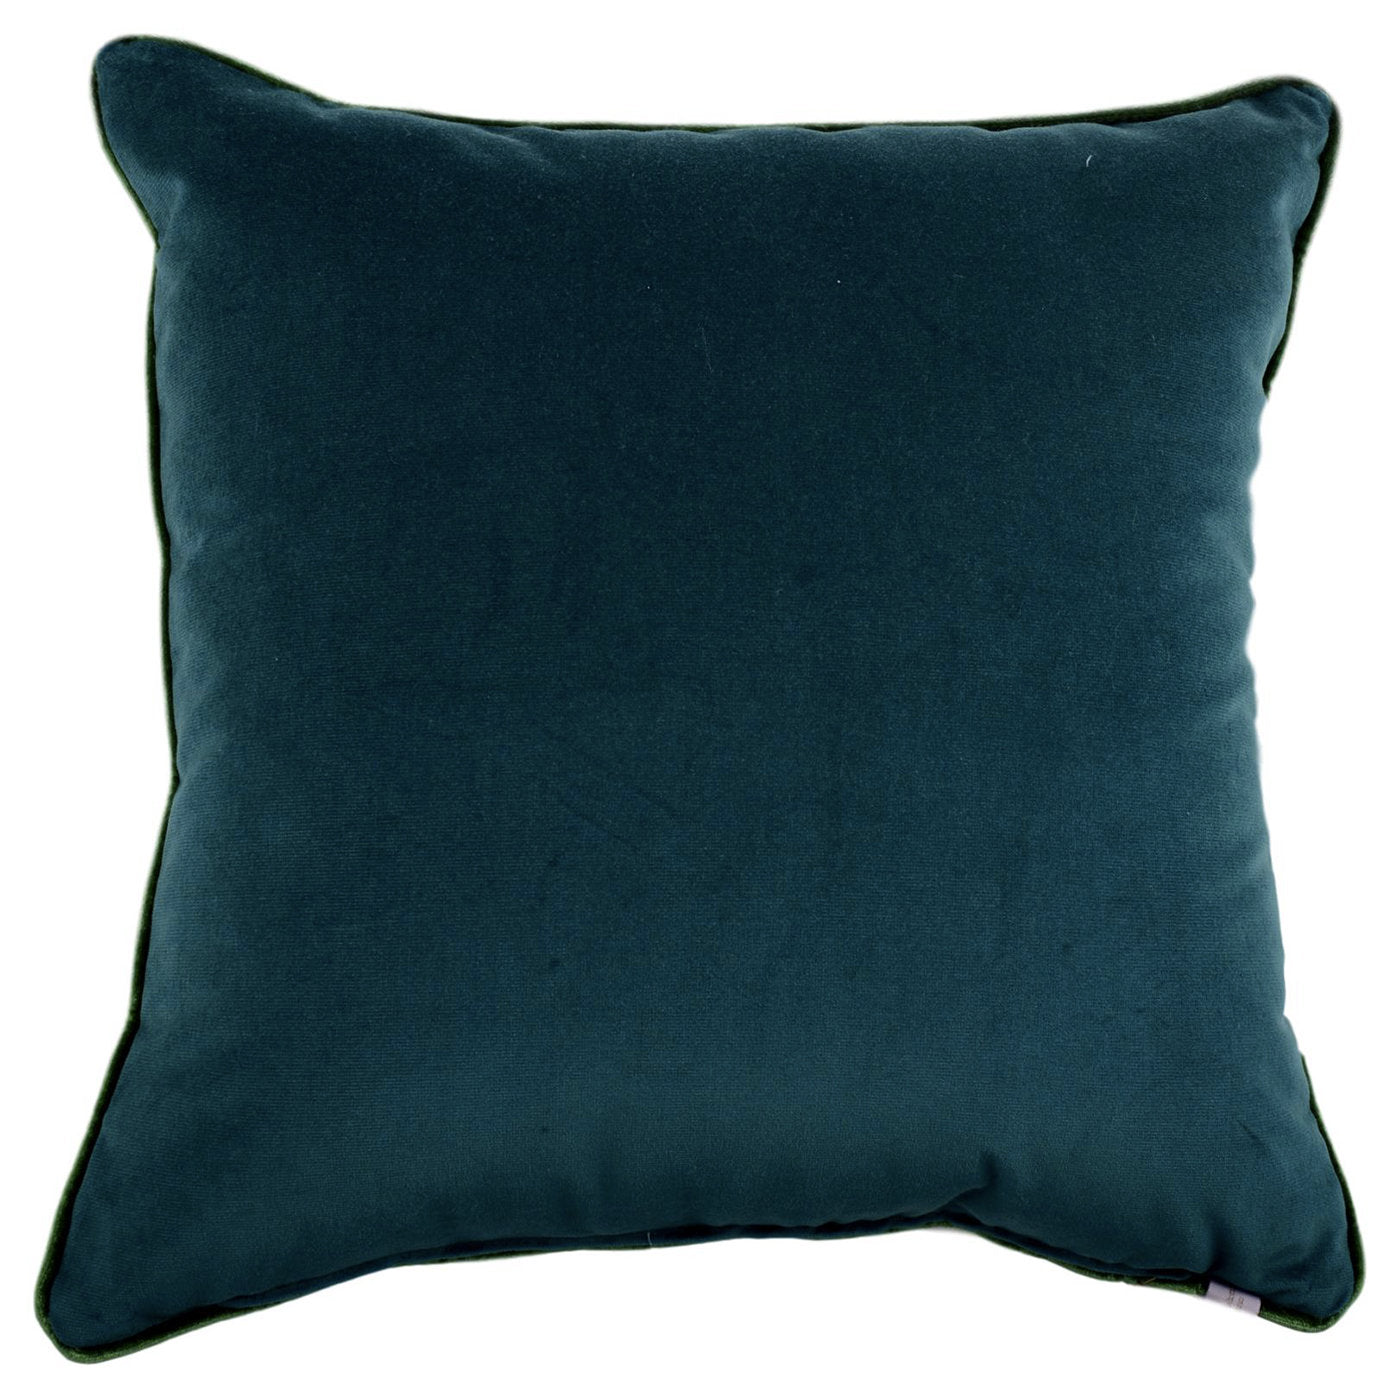 Emerald Carré Cushion in striped jacquard fabric - Alternative view 1